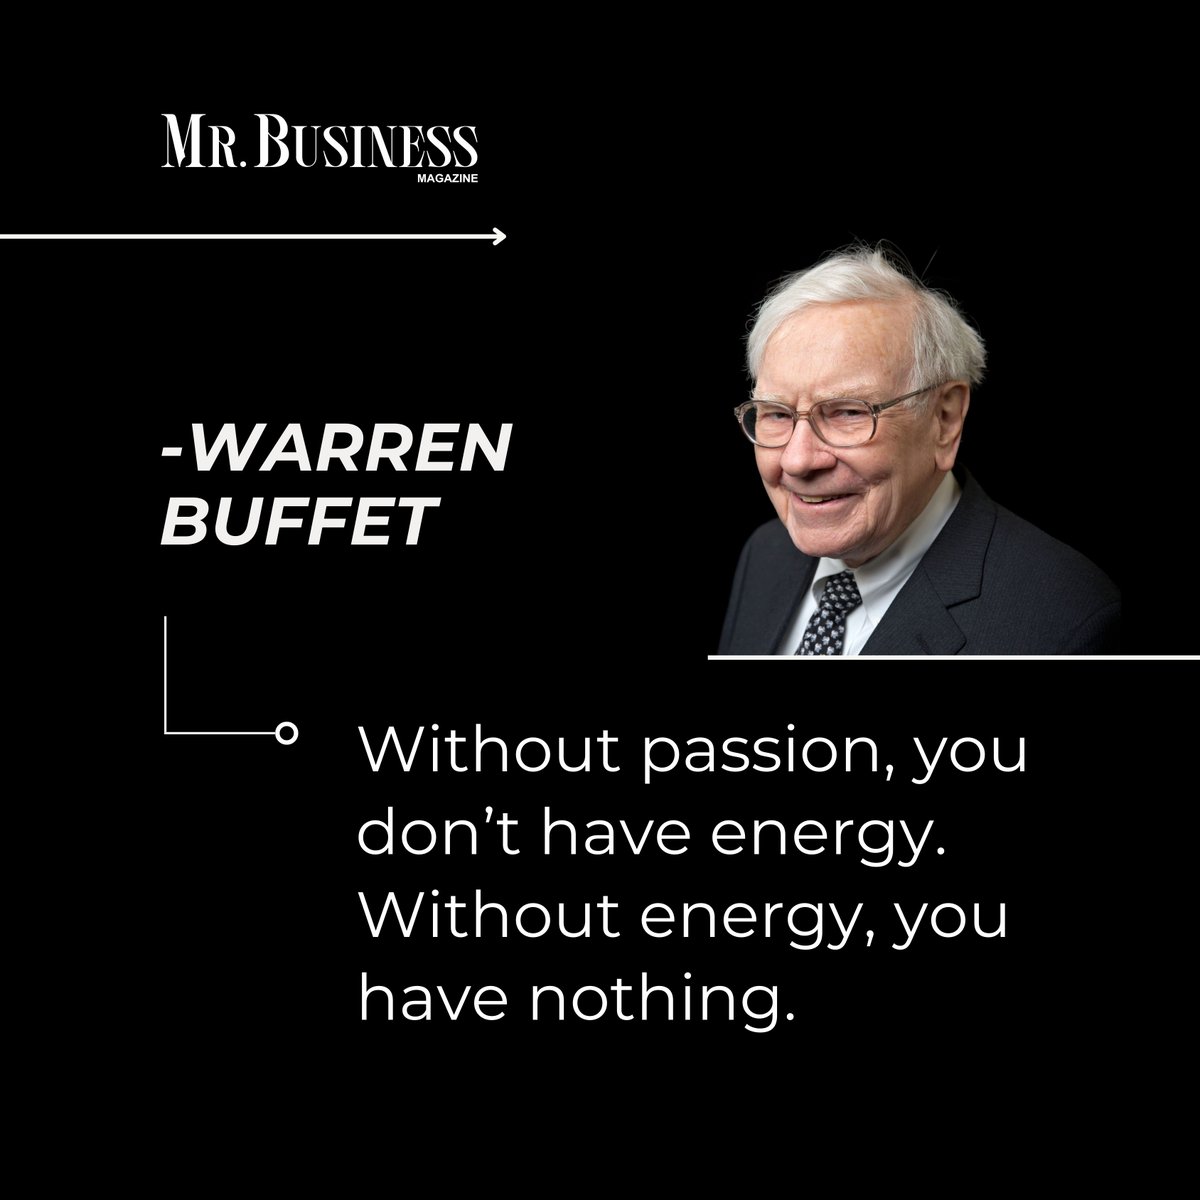 ✔Warren Buffet, the maestro has a piece of Monday motivation we all need.
For more information 
📕Read - mrbusinessmagazine.com

#WarrenBuffet #MotivationMonday #WisdomFromTheMaestro #InvestingInspiration  #SageAdvice #BuffettQuotes #MondayMotivation  #MrBusinessMagazine